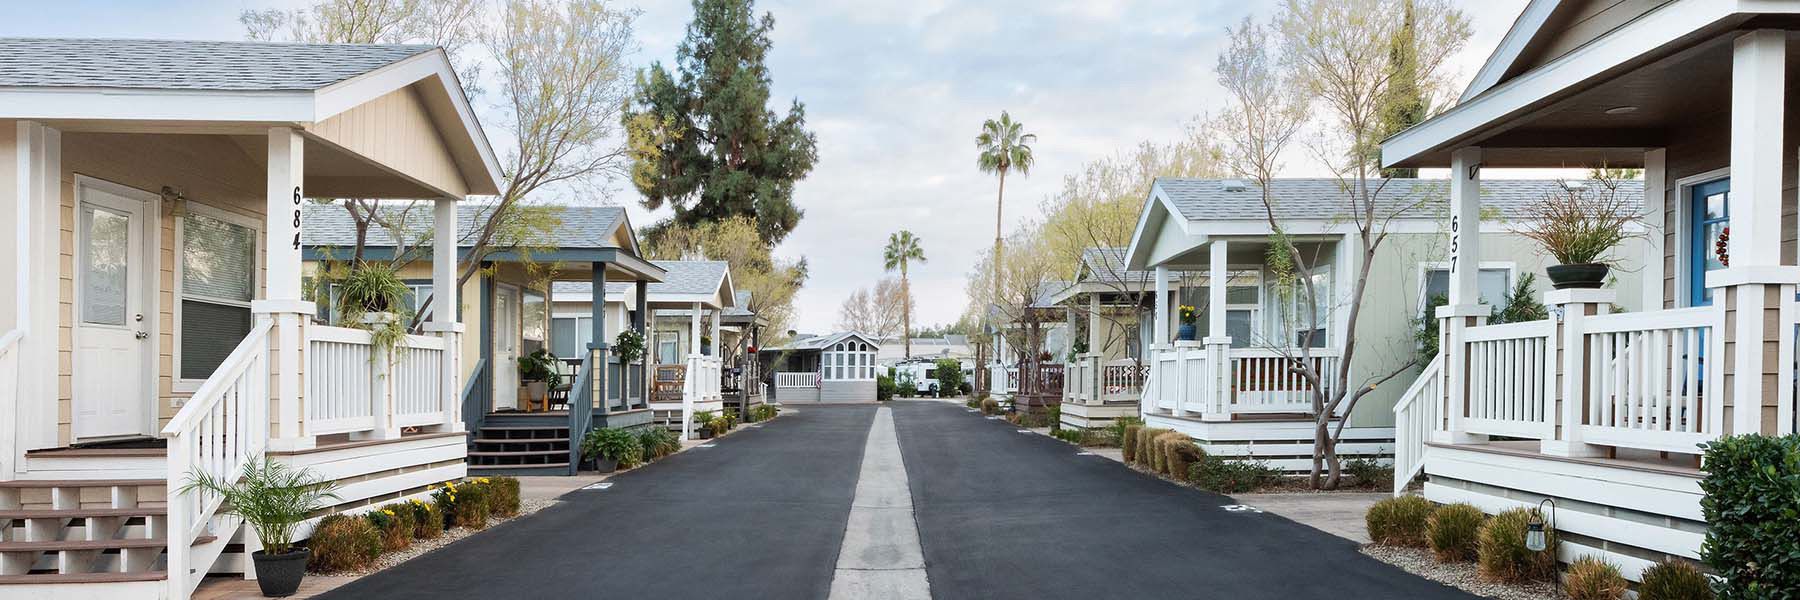 Own a Cottage Golden Village Palms Hemet California